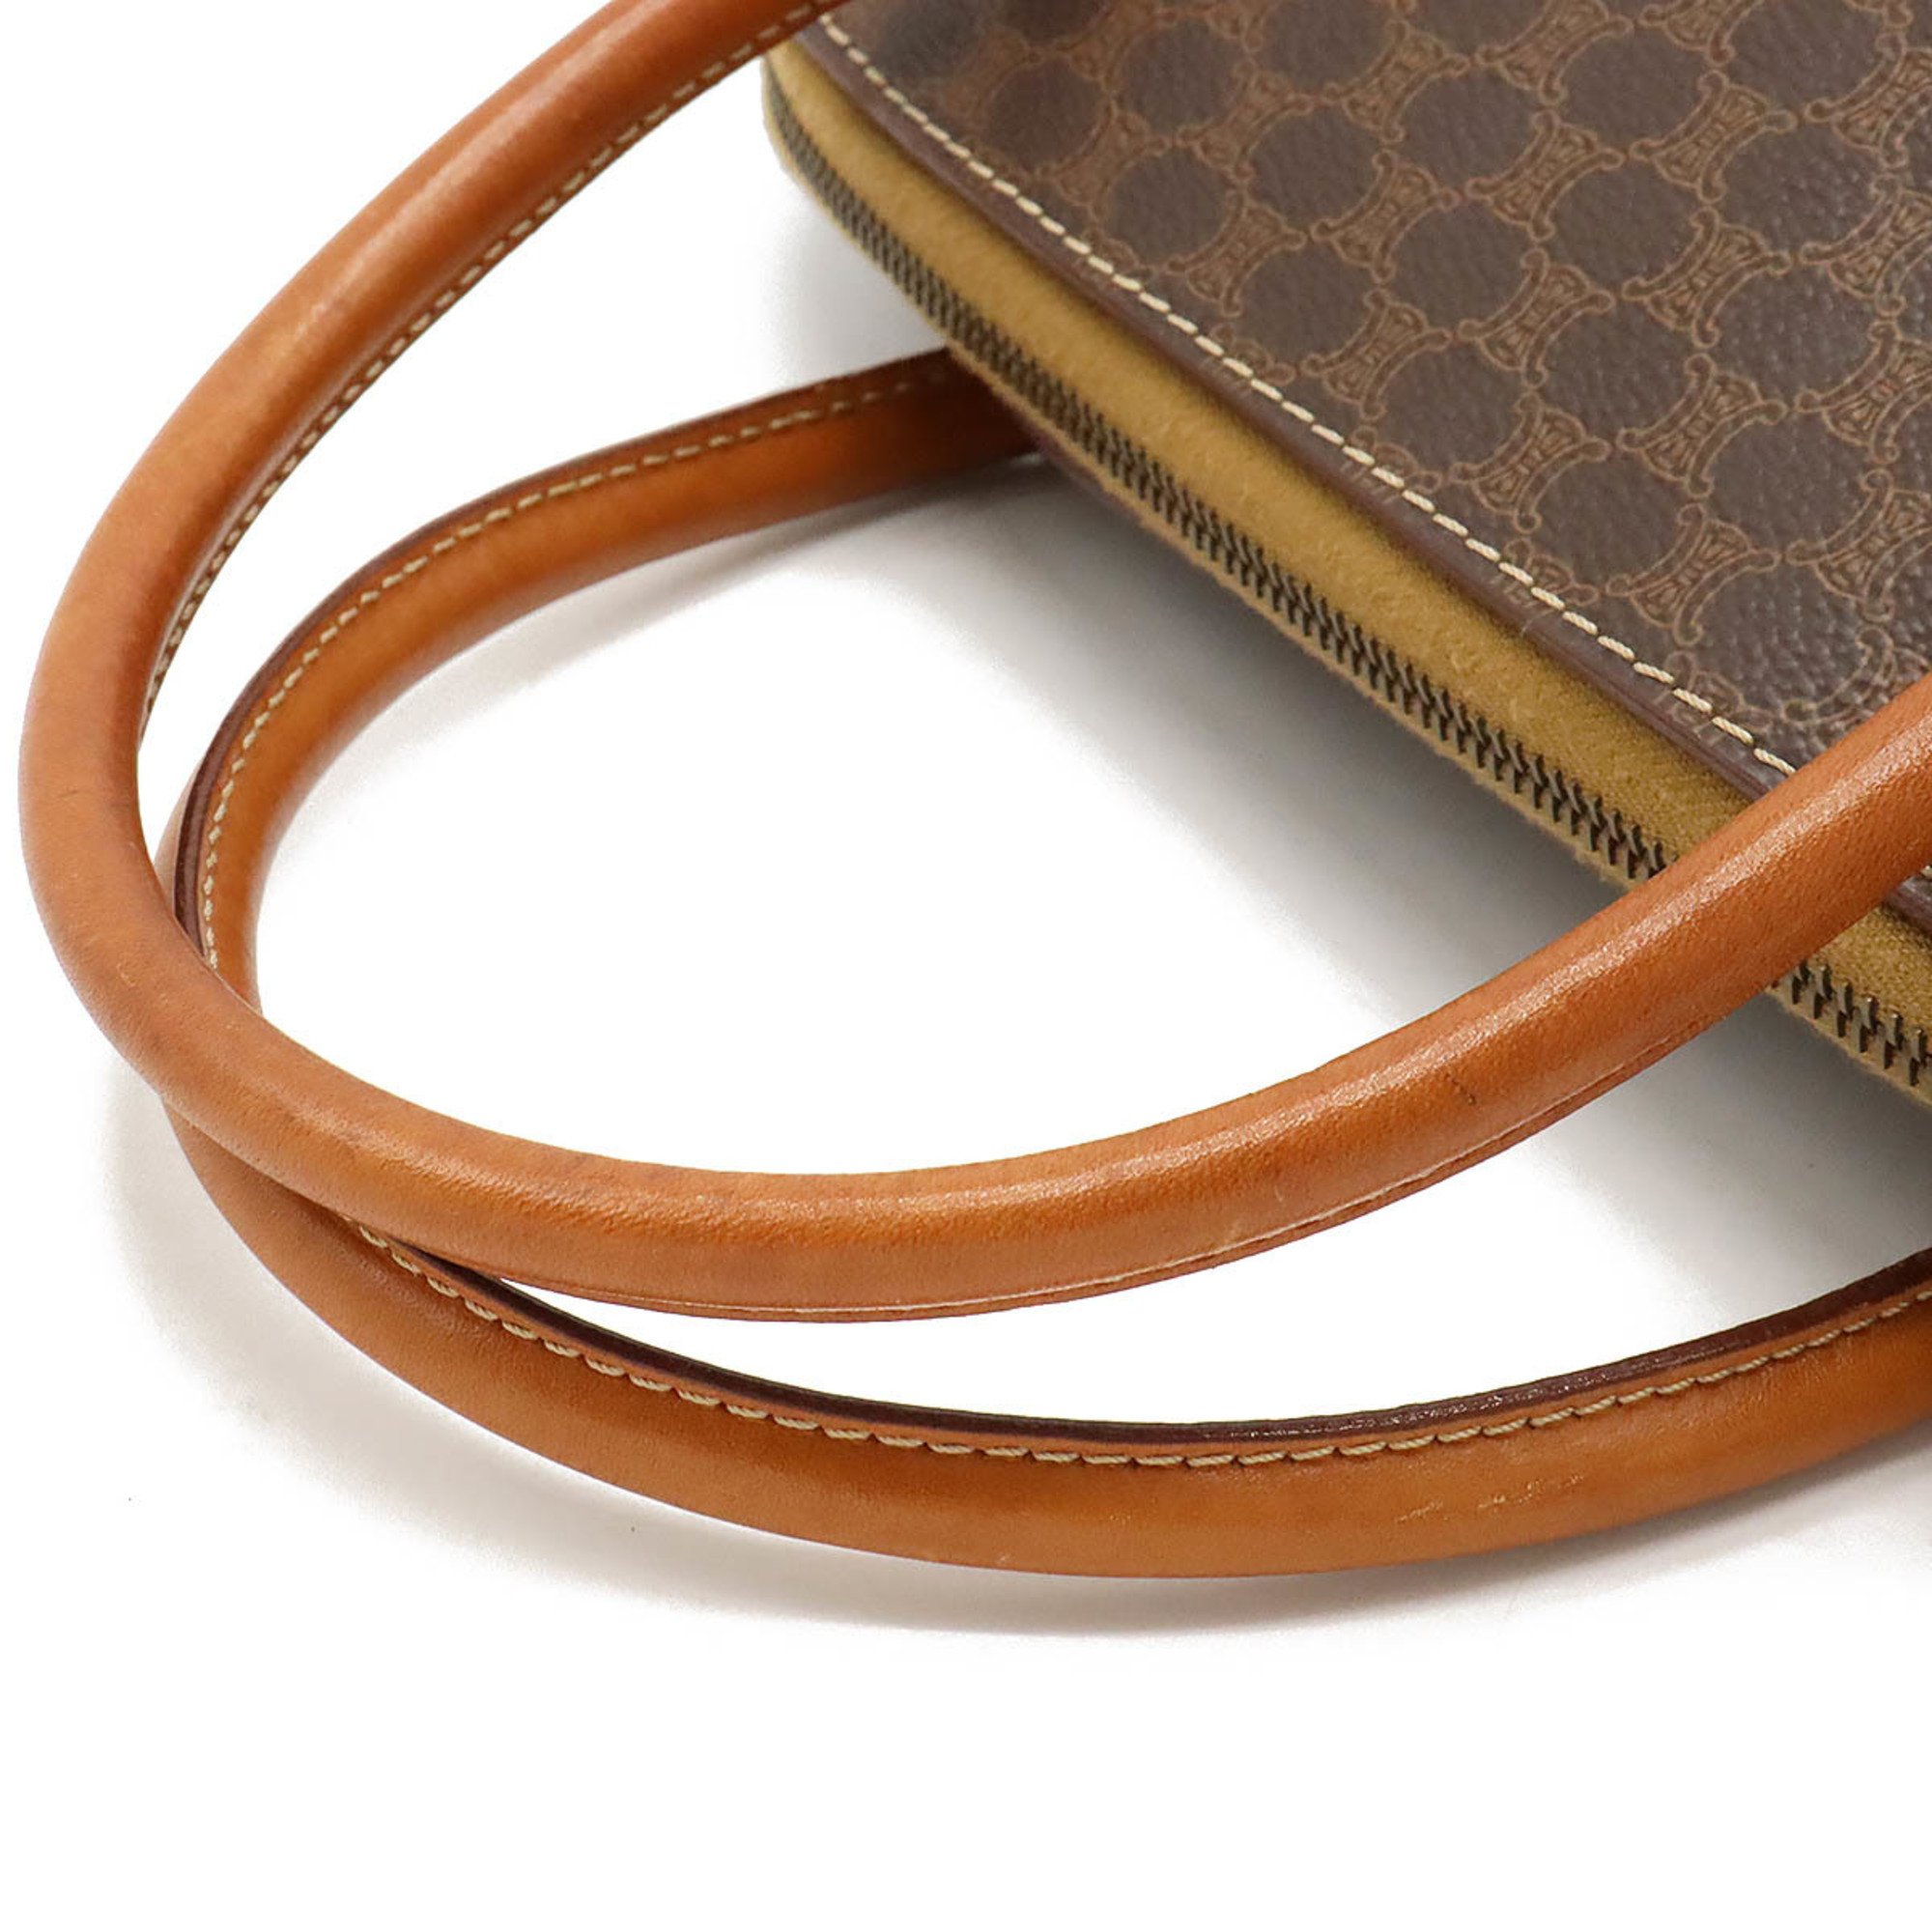 CELINE Macadam pattern handbag shoulder bag PVC leather dark brown